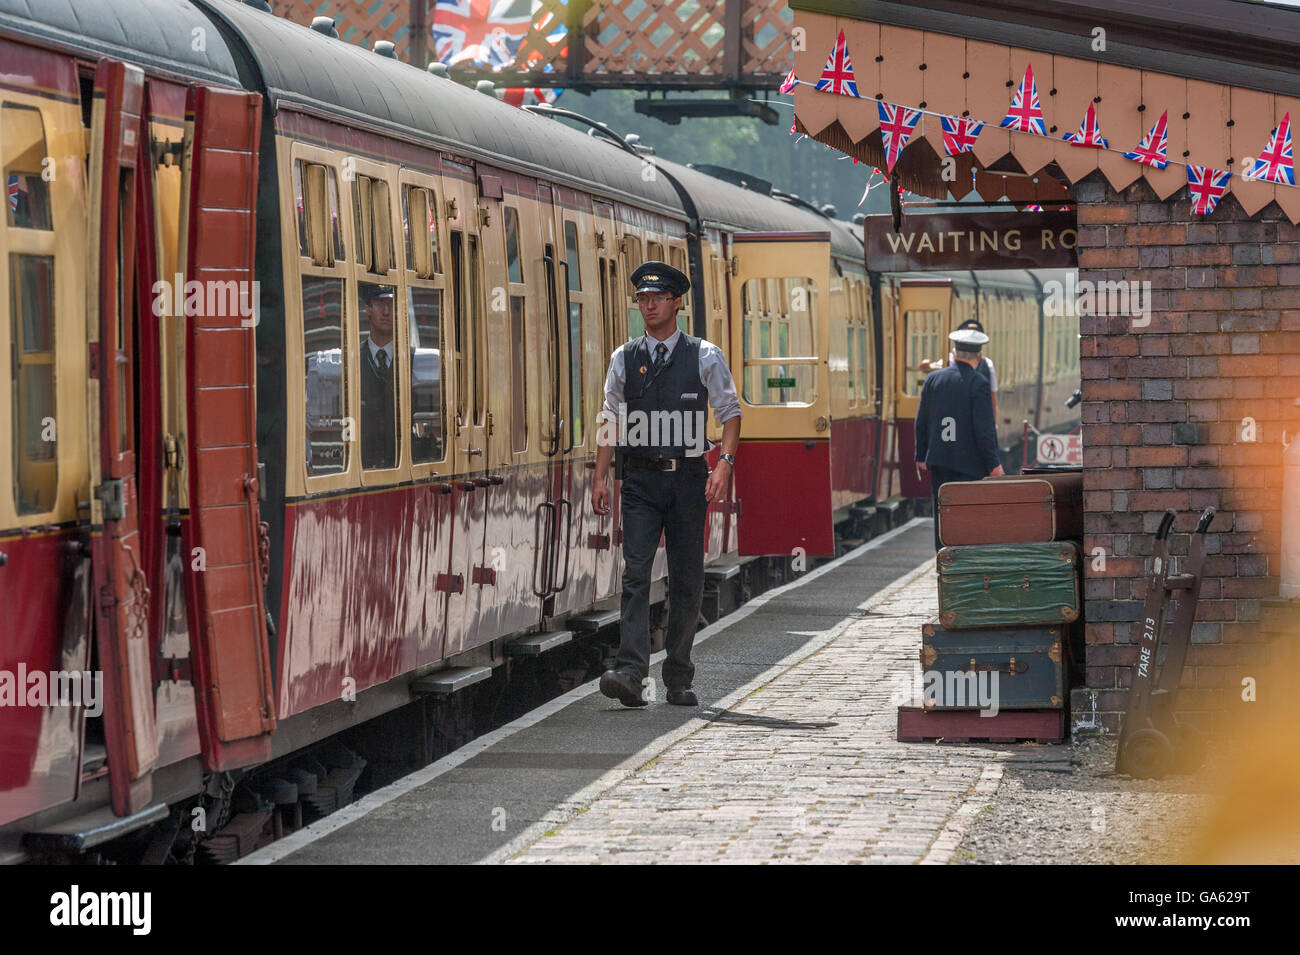 A train guard walking along the platform next to a steam train Stock Photo